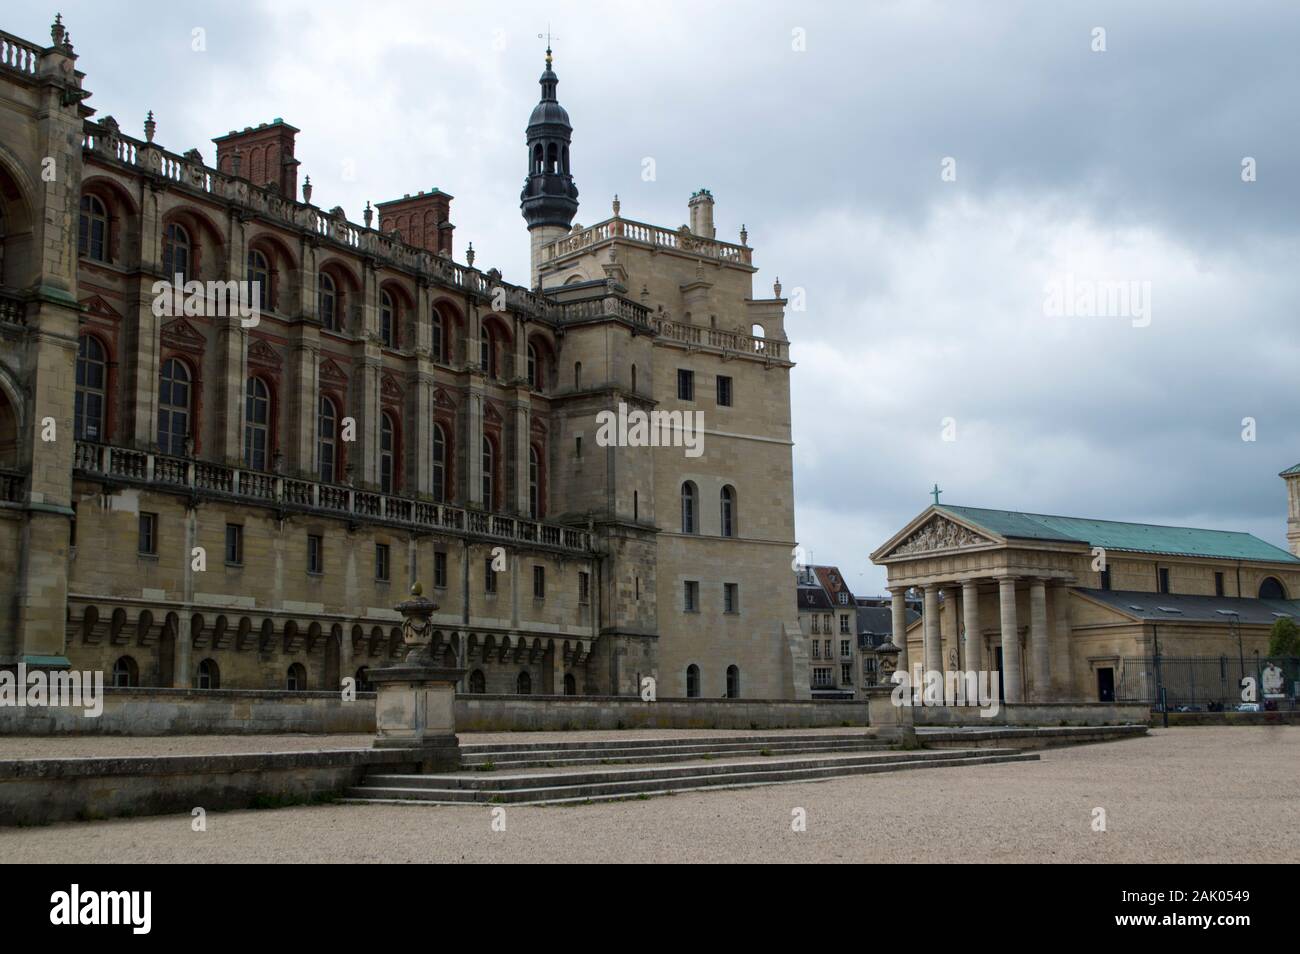 Castle of Saint-Germain-en-Laye Stock Photo